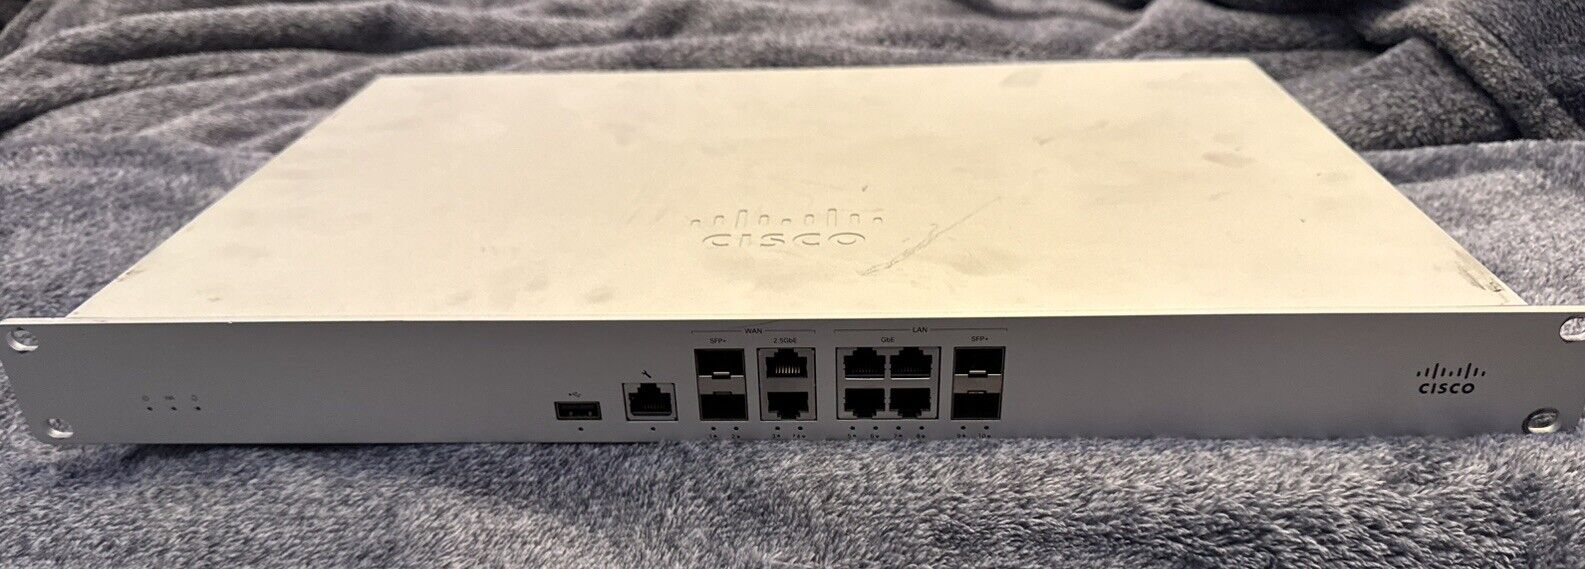 Cisco MX95-HW Meraki 2 Gbps 4x 10 Gigabit SFP+ 6x RJ45 Firewall - UNCLAIMED